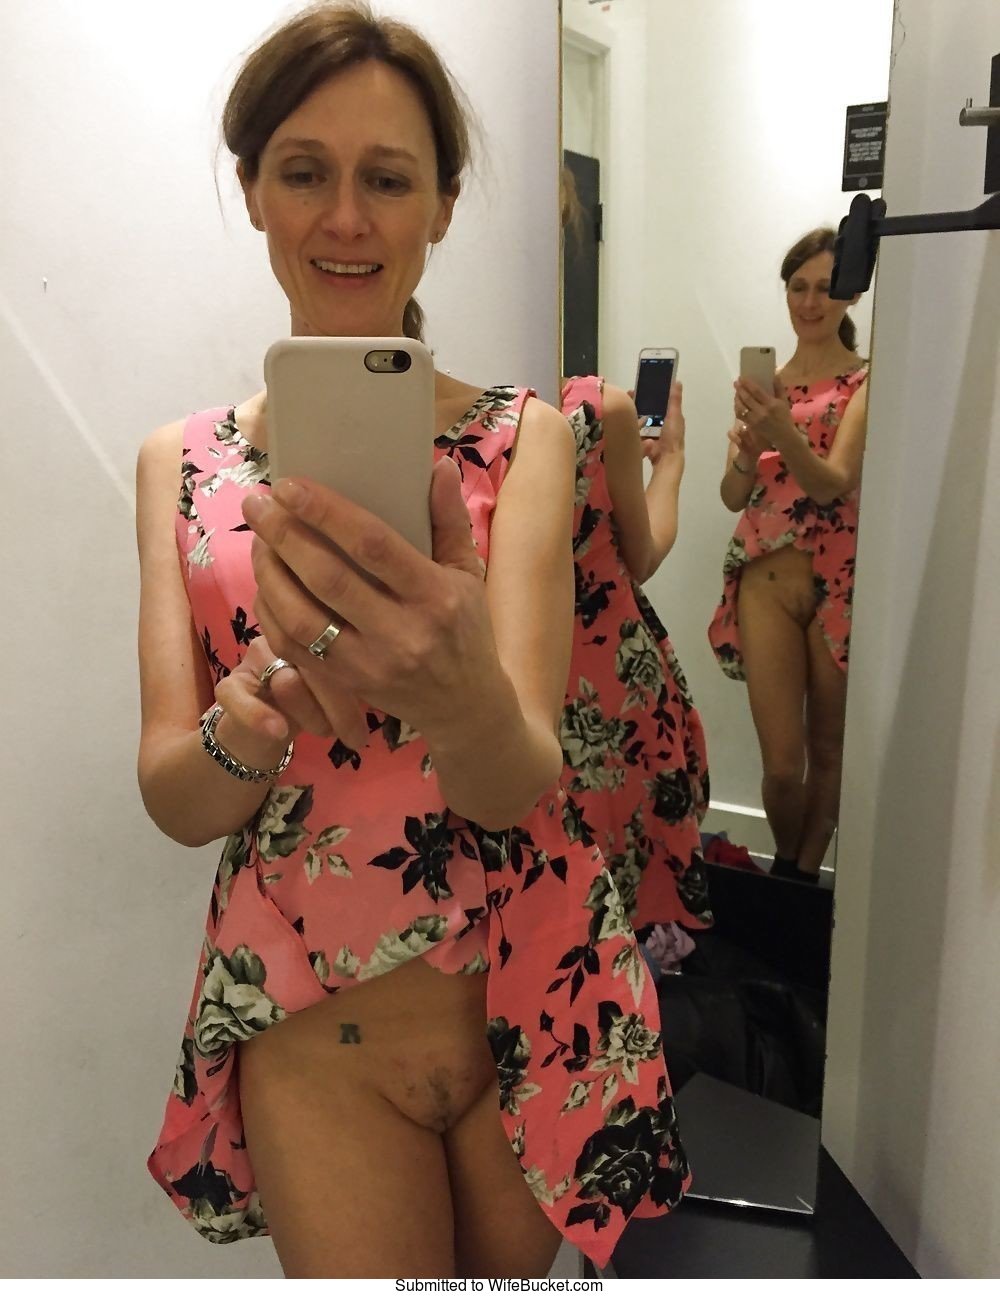 WifeBucket Nude selfies of wives over 40